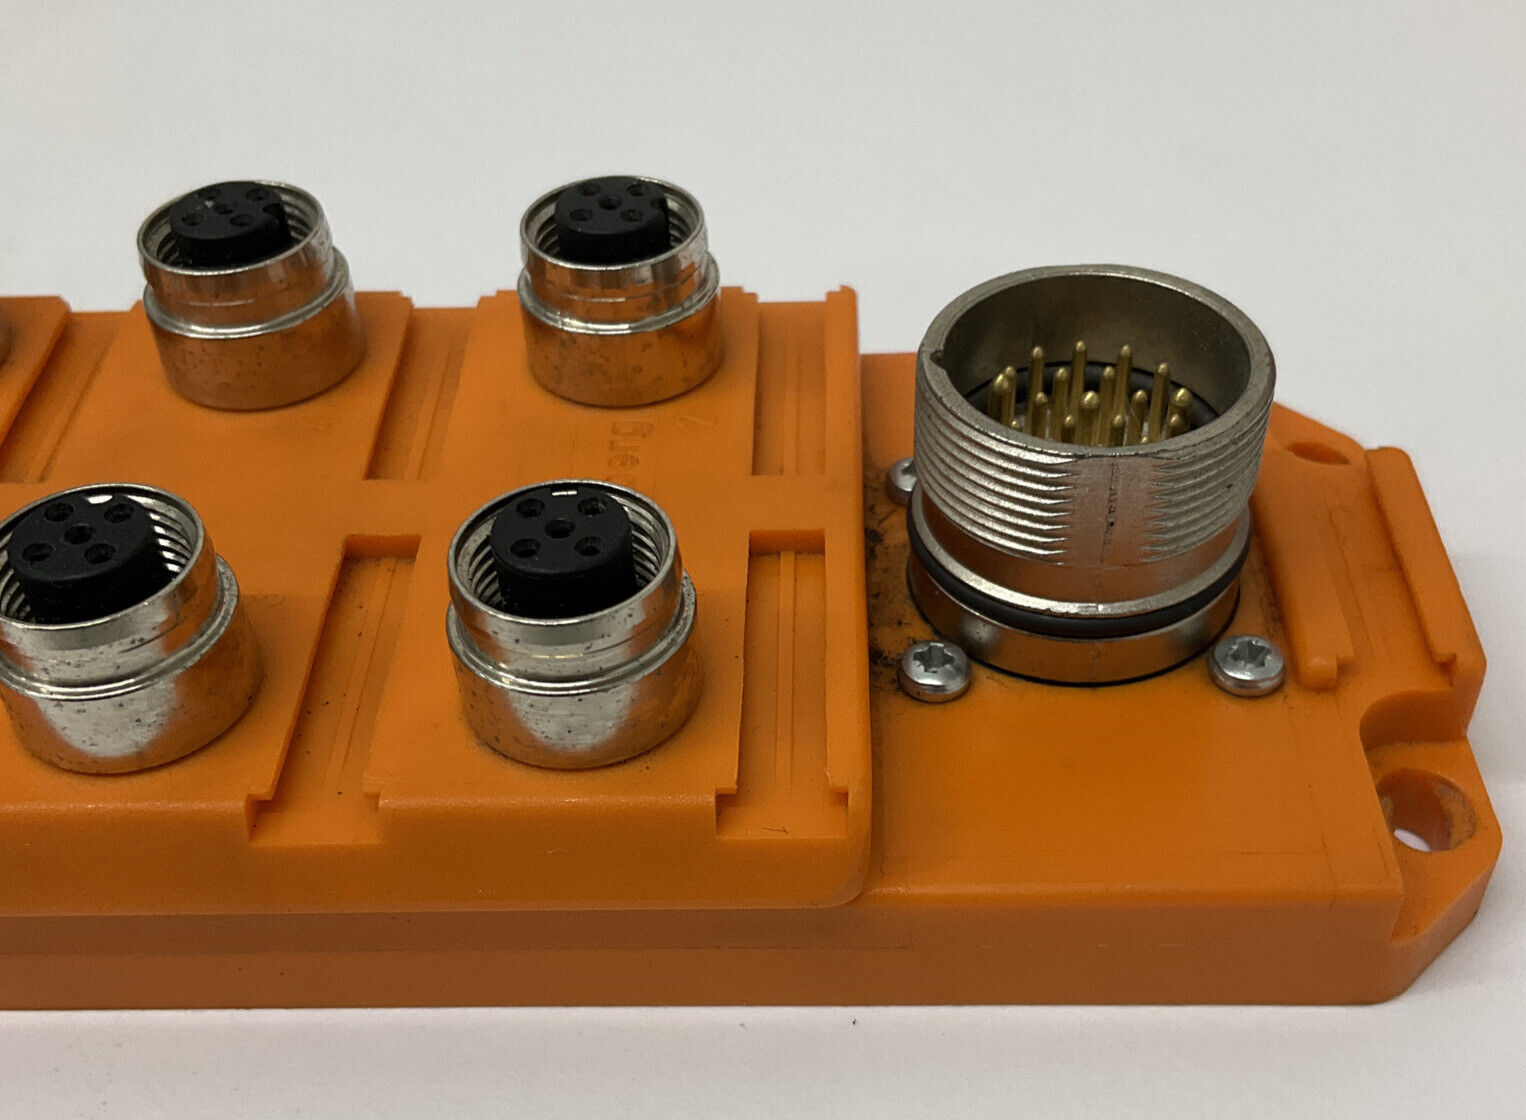 Lemberg ASBSV8-5 8Point Actuator Sensor Box (GR209)